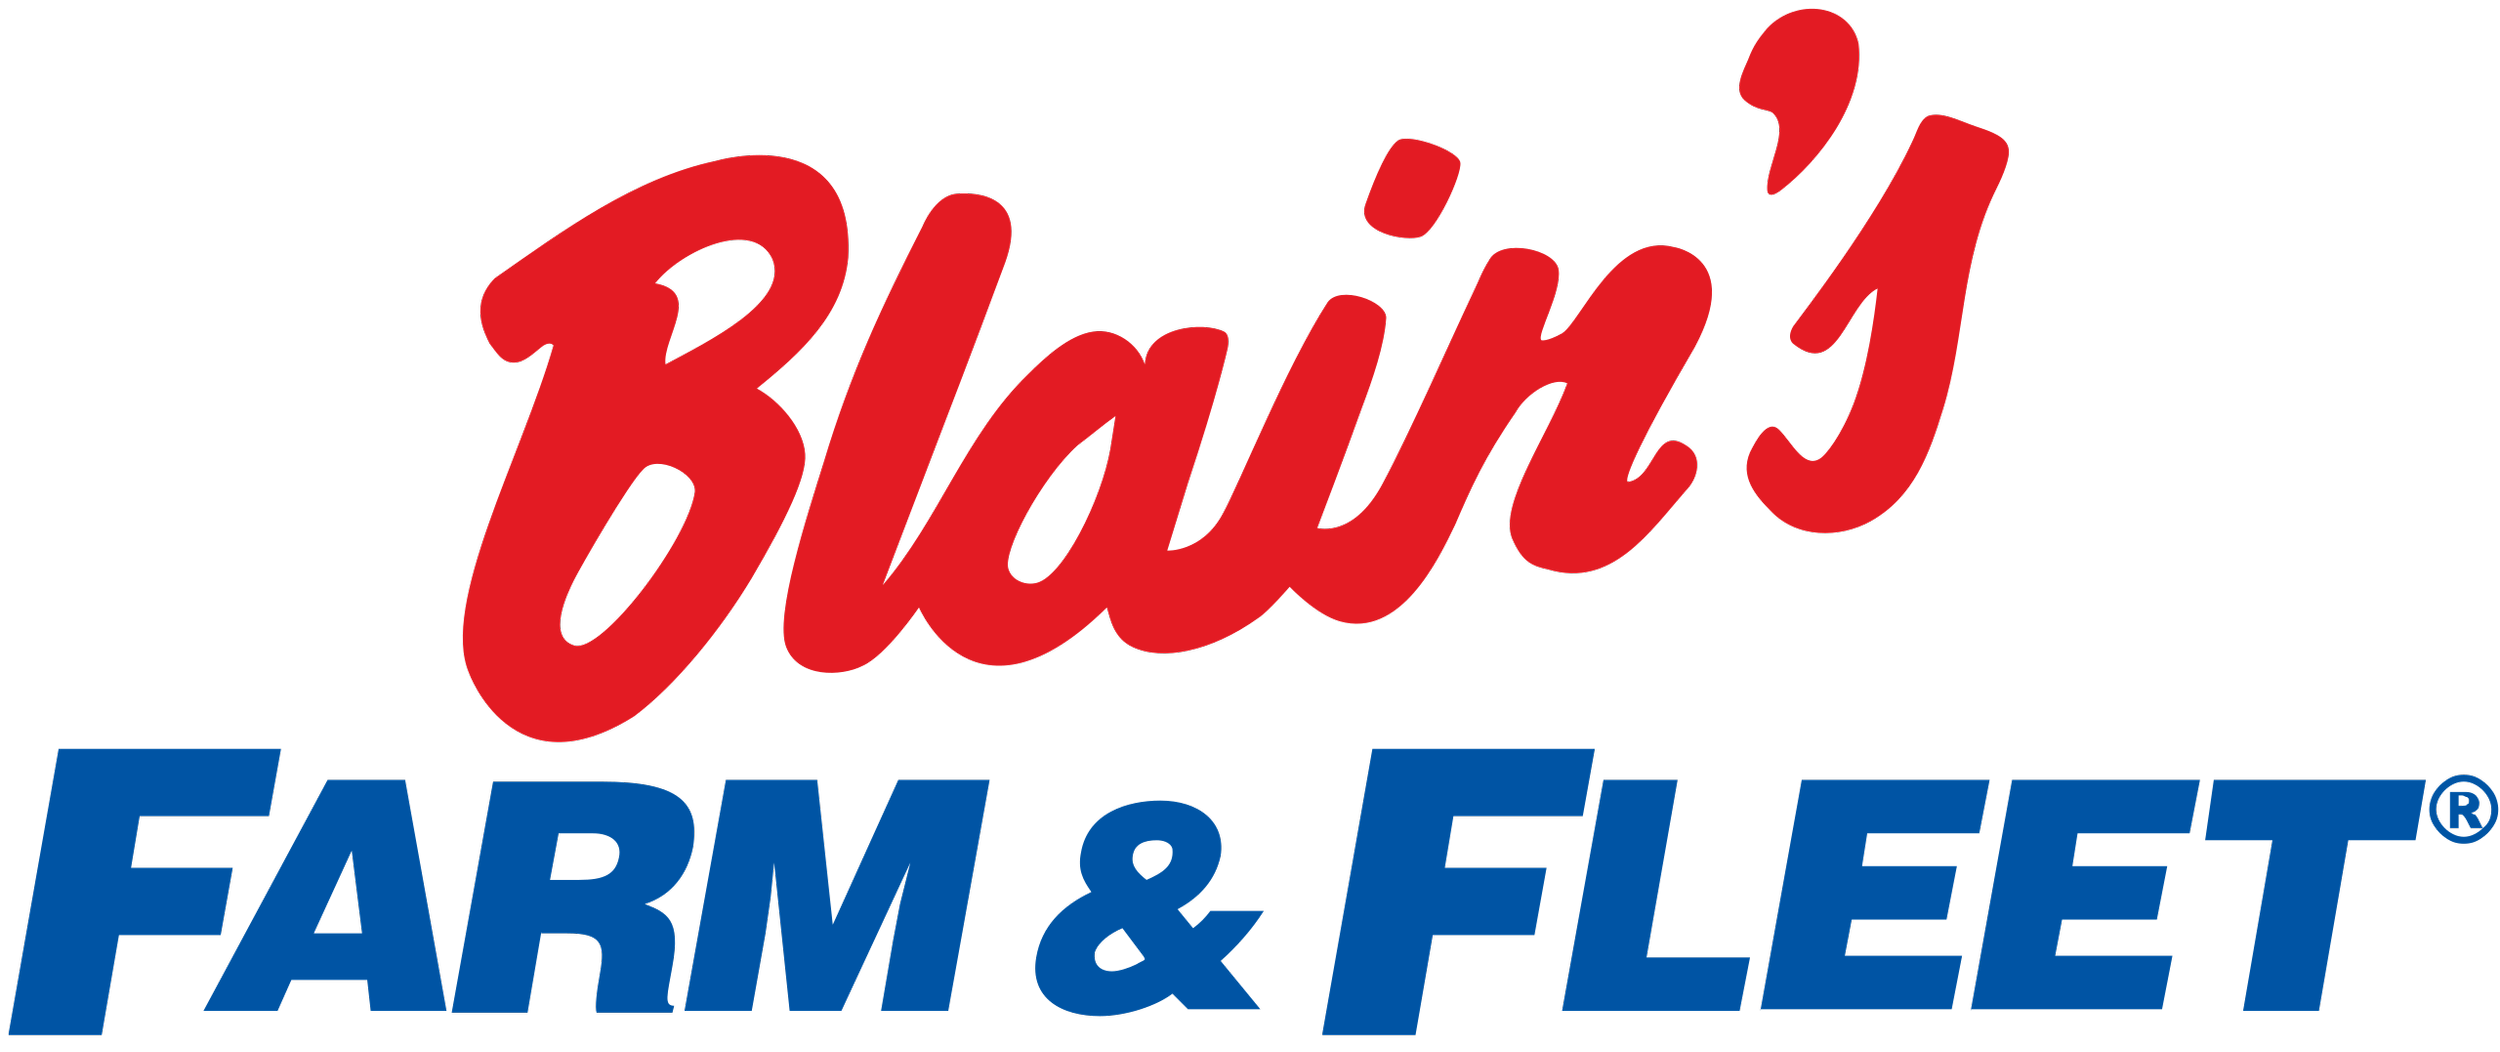 Blain's_Farm_&_Fleet_logo.png